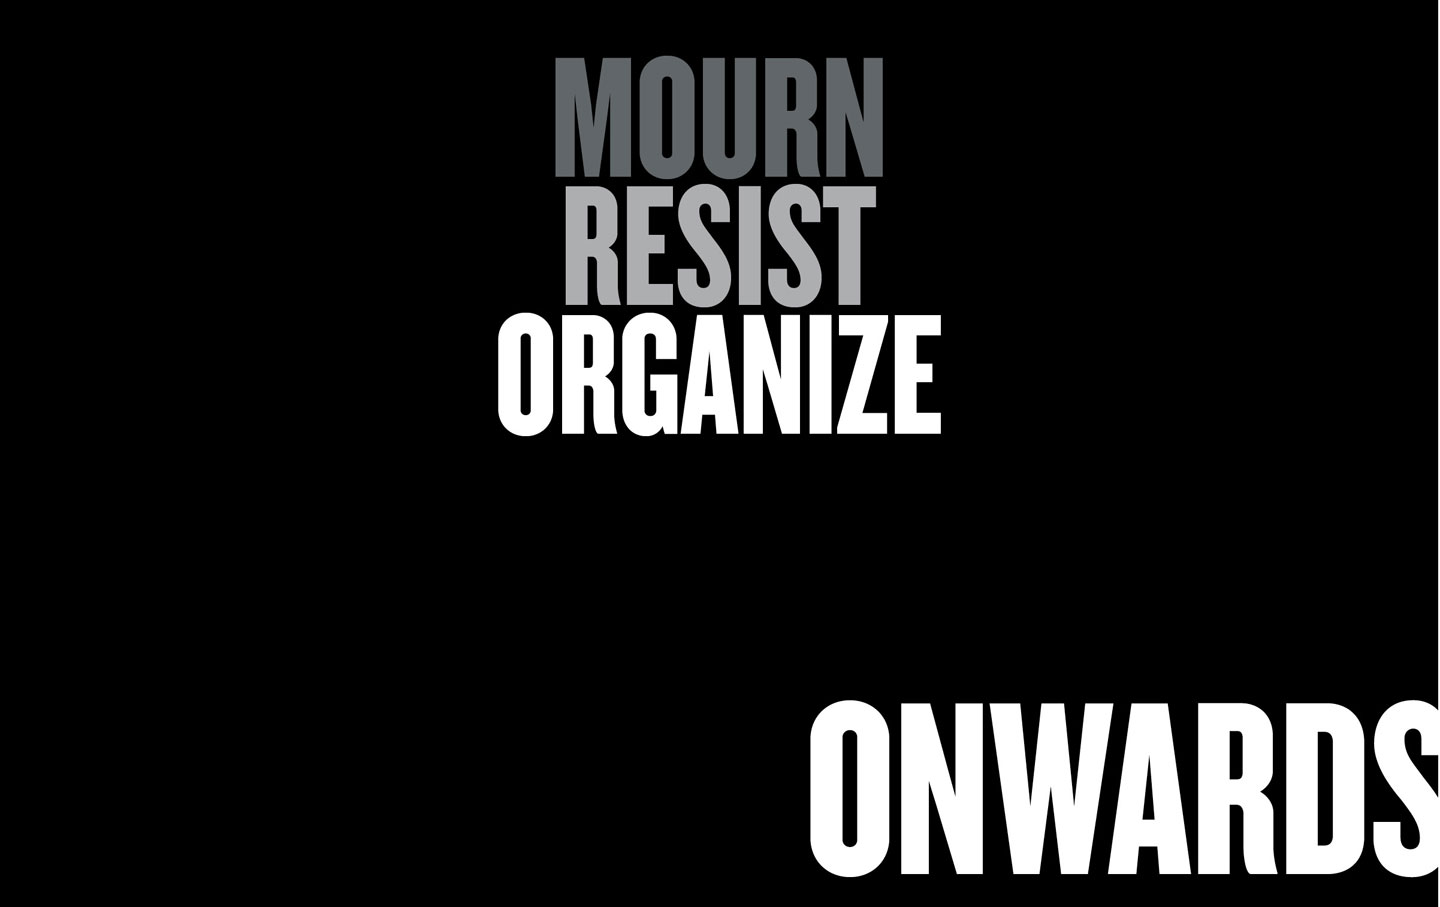 Mourn. Resist. Organize.